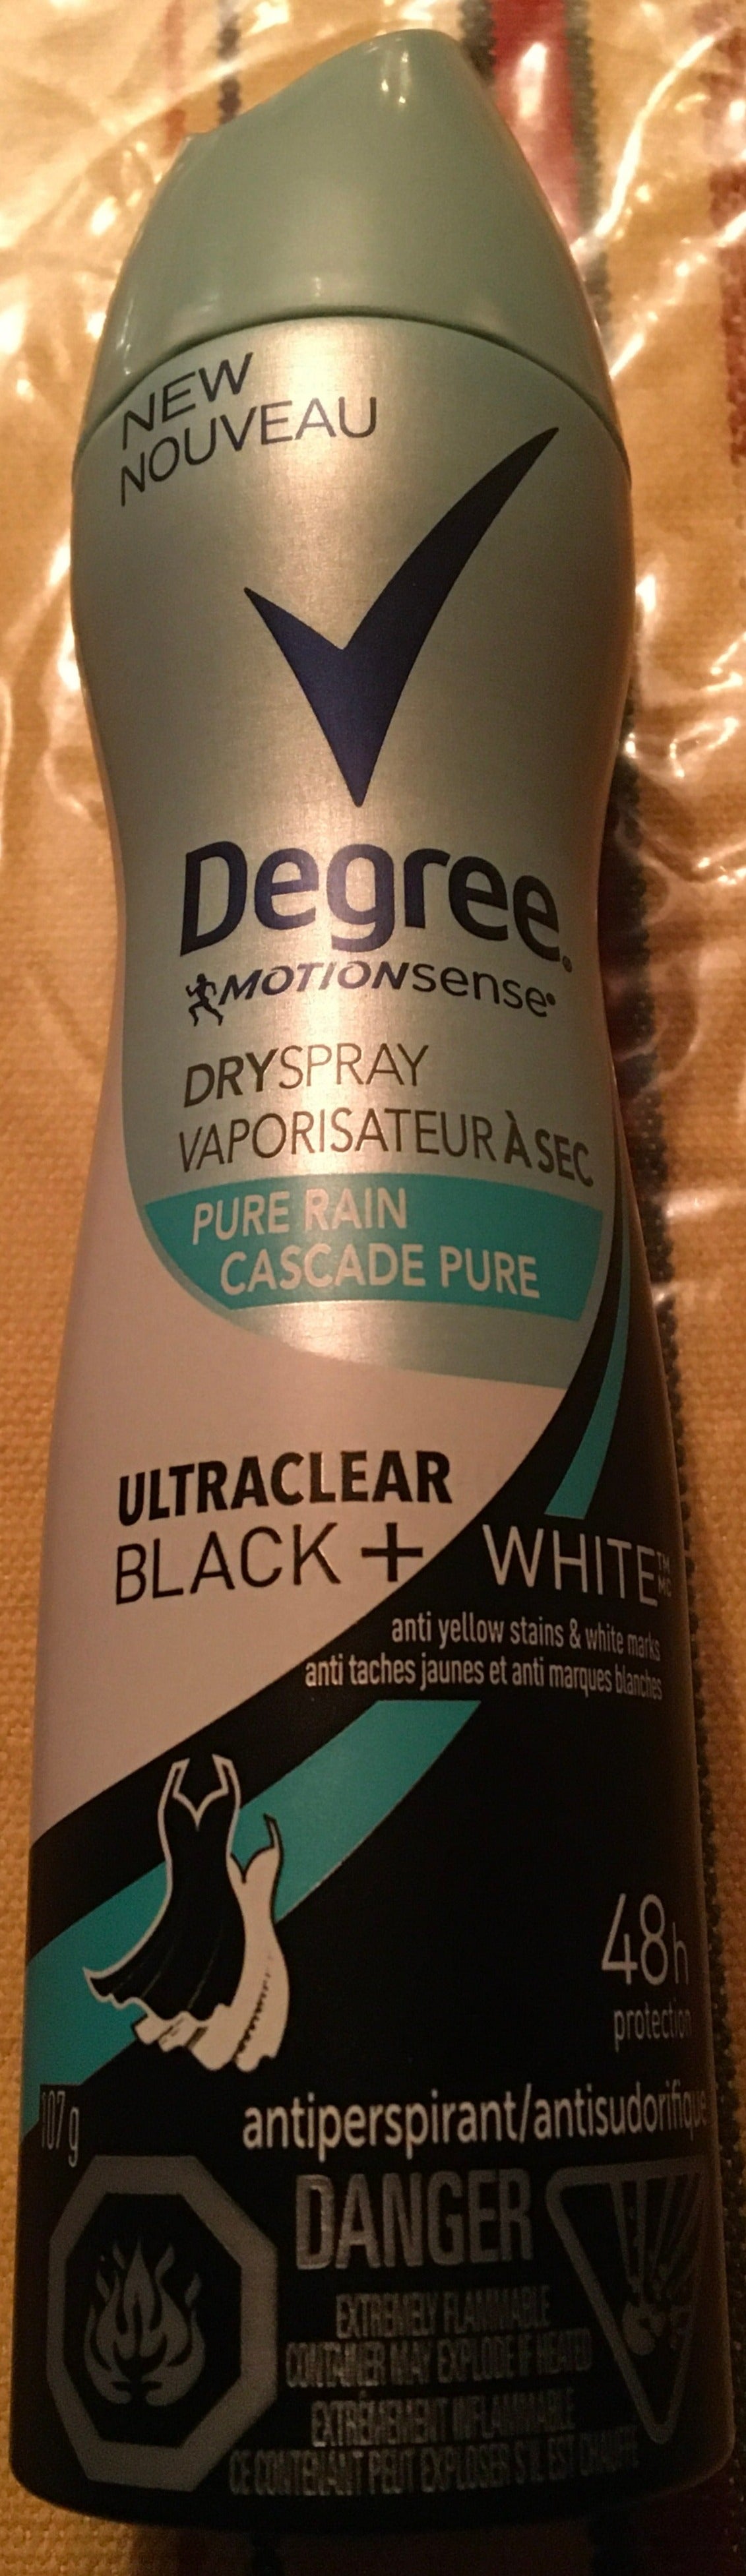 Degree Dry Spray antiperspirant